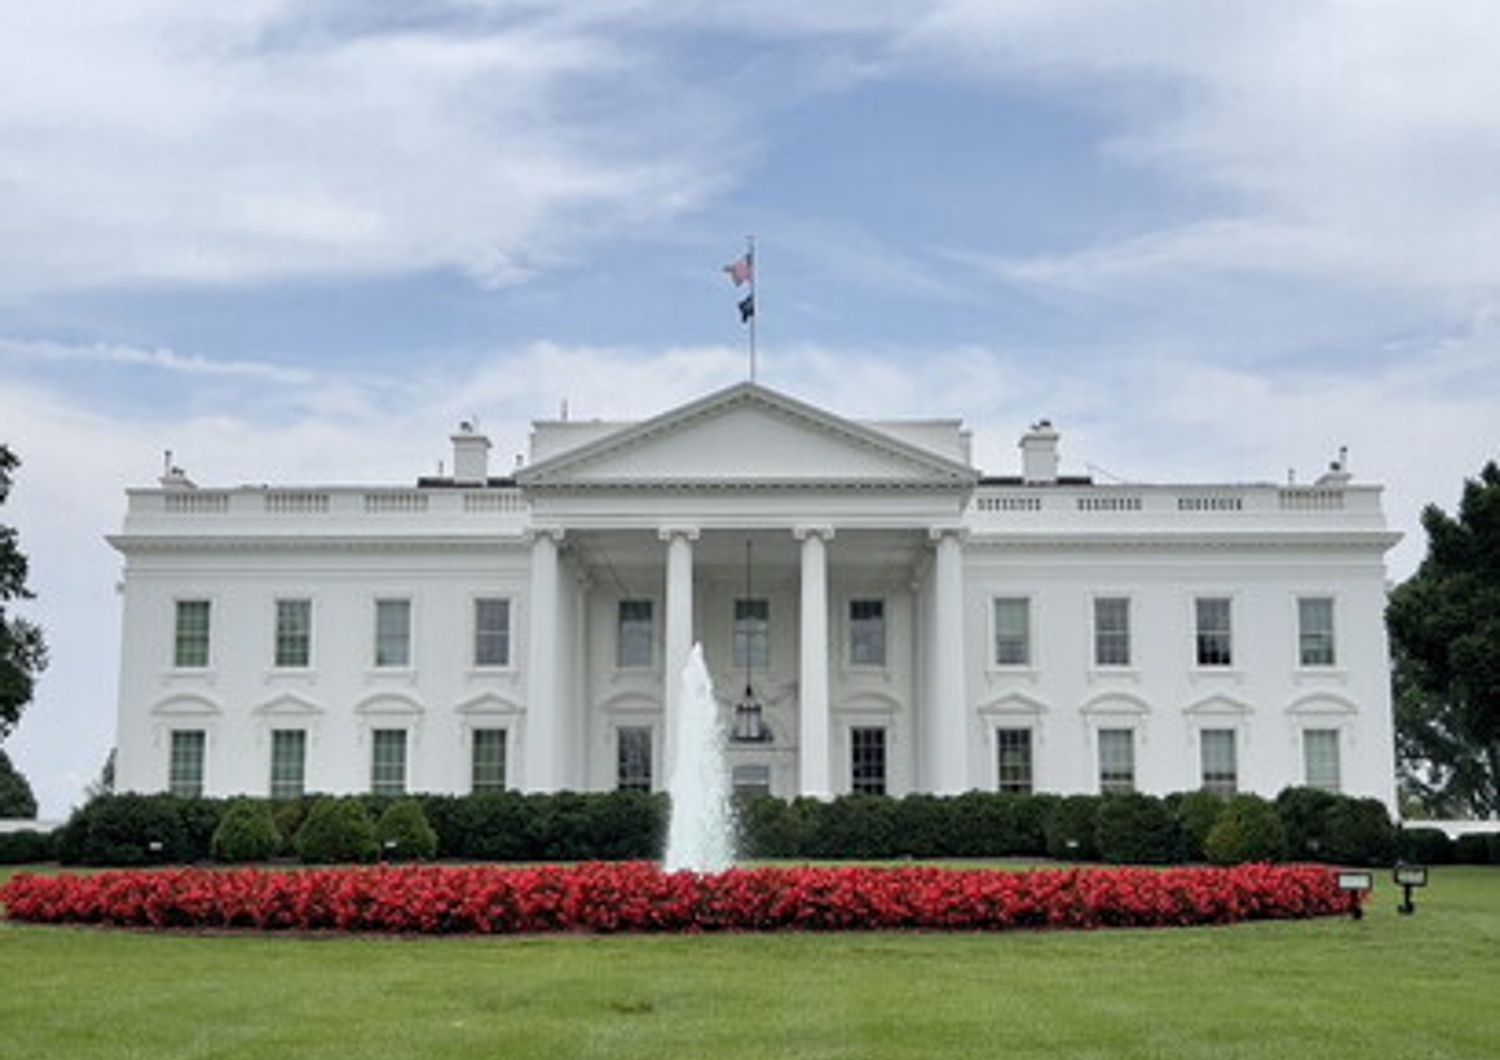 La Casa Bianca, Washington D.C.